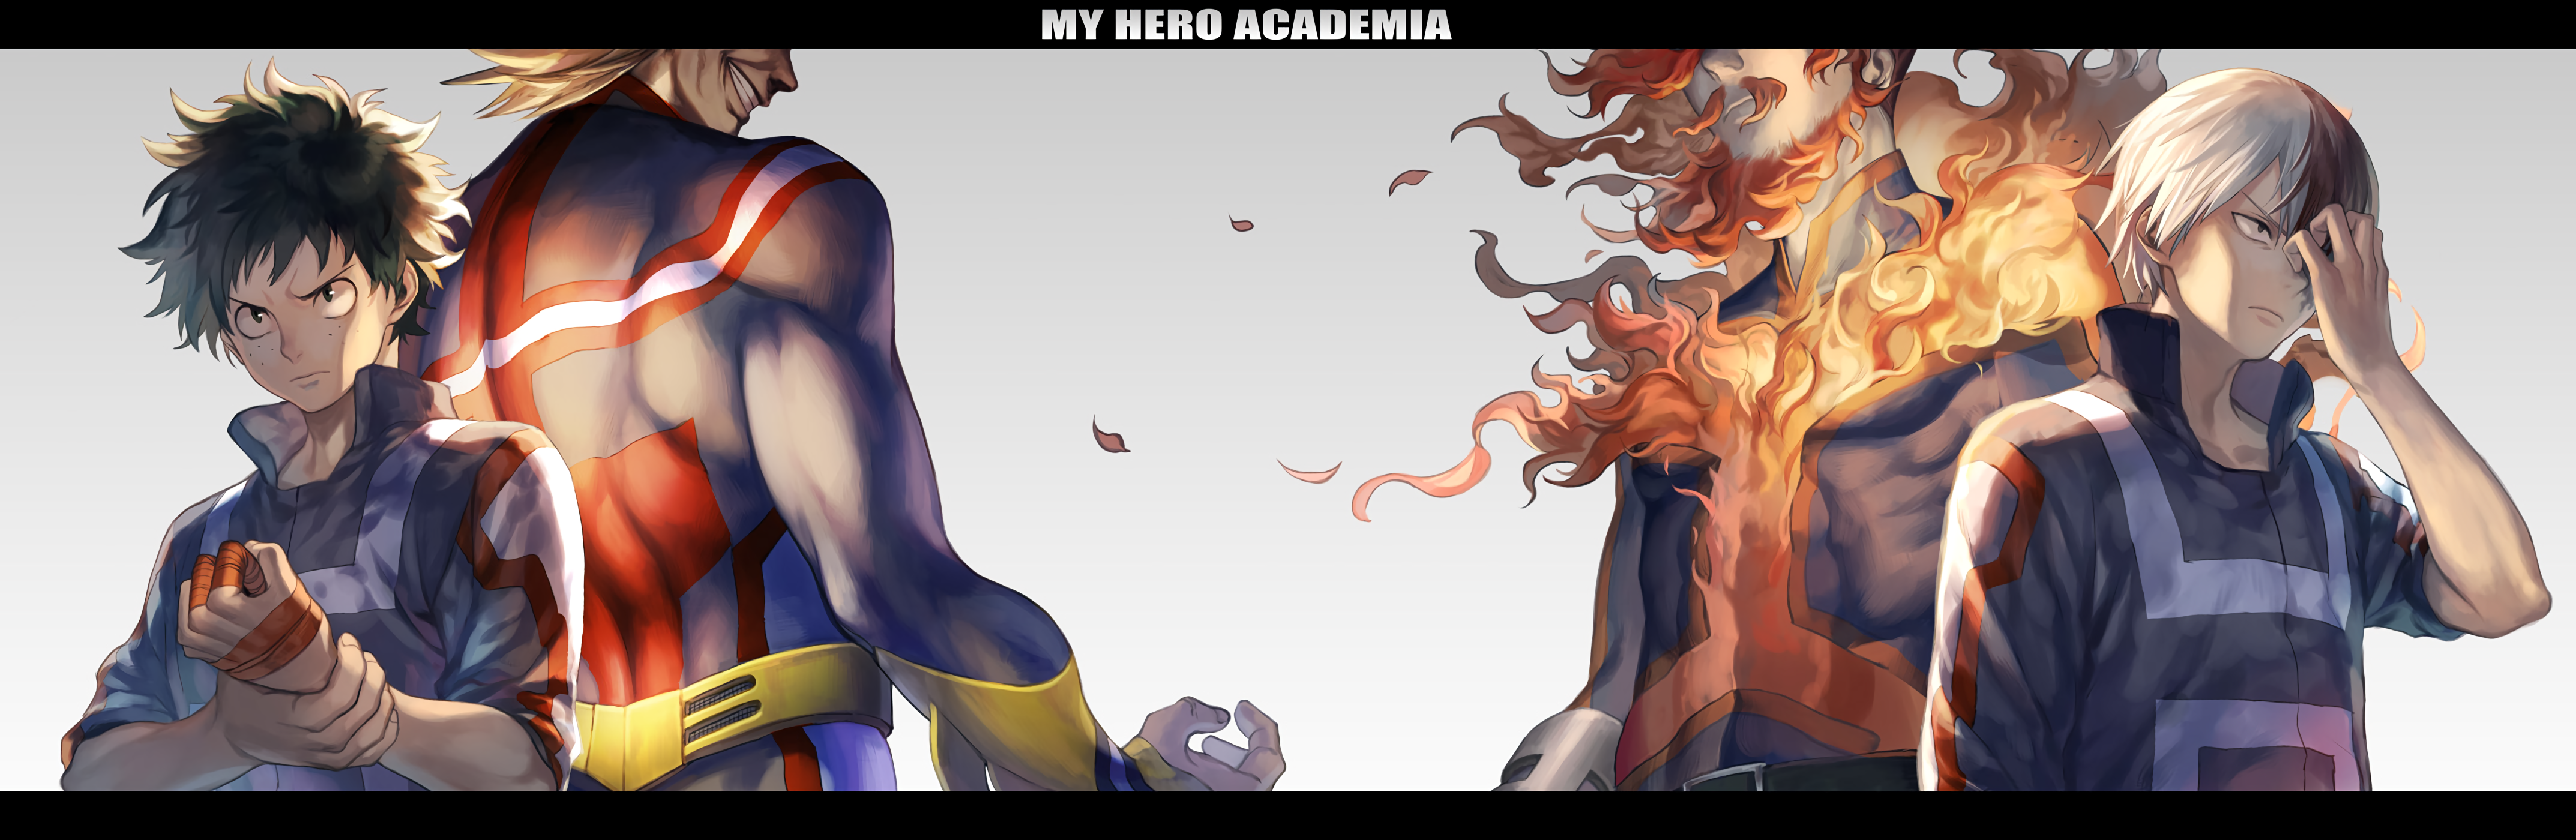 My Hero Academia Dual Monitor Wallpapers